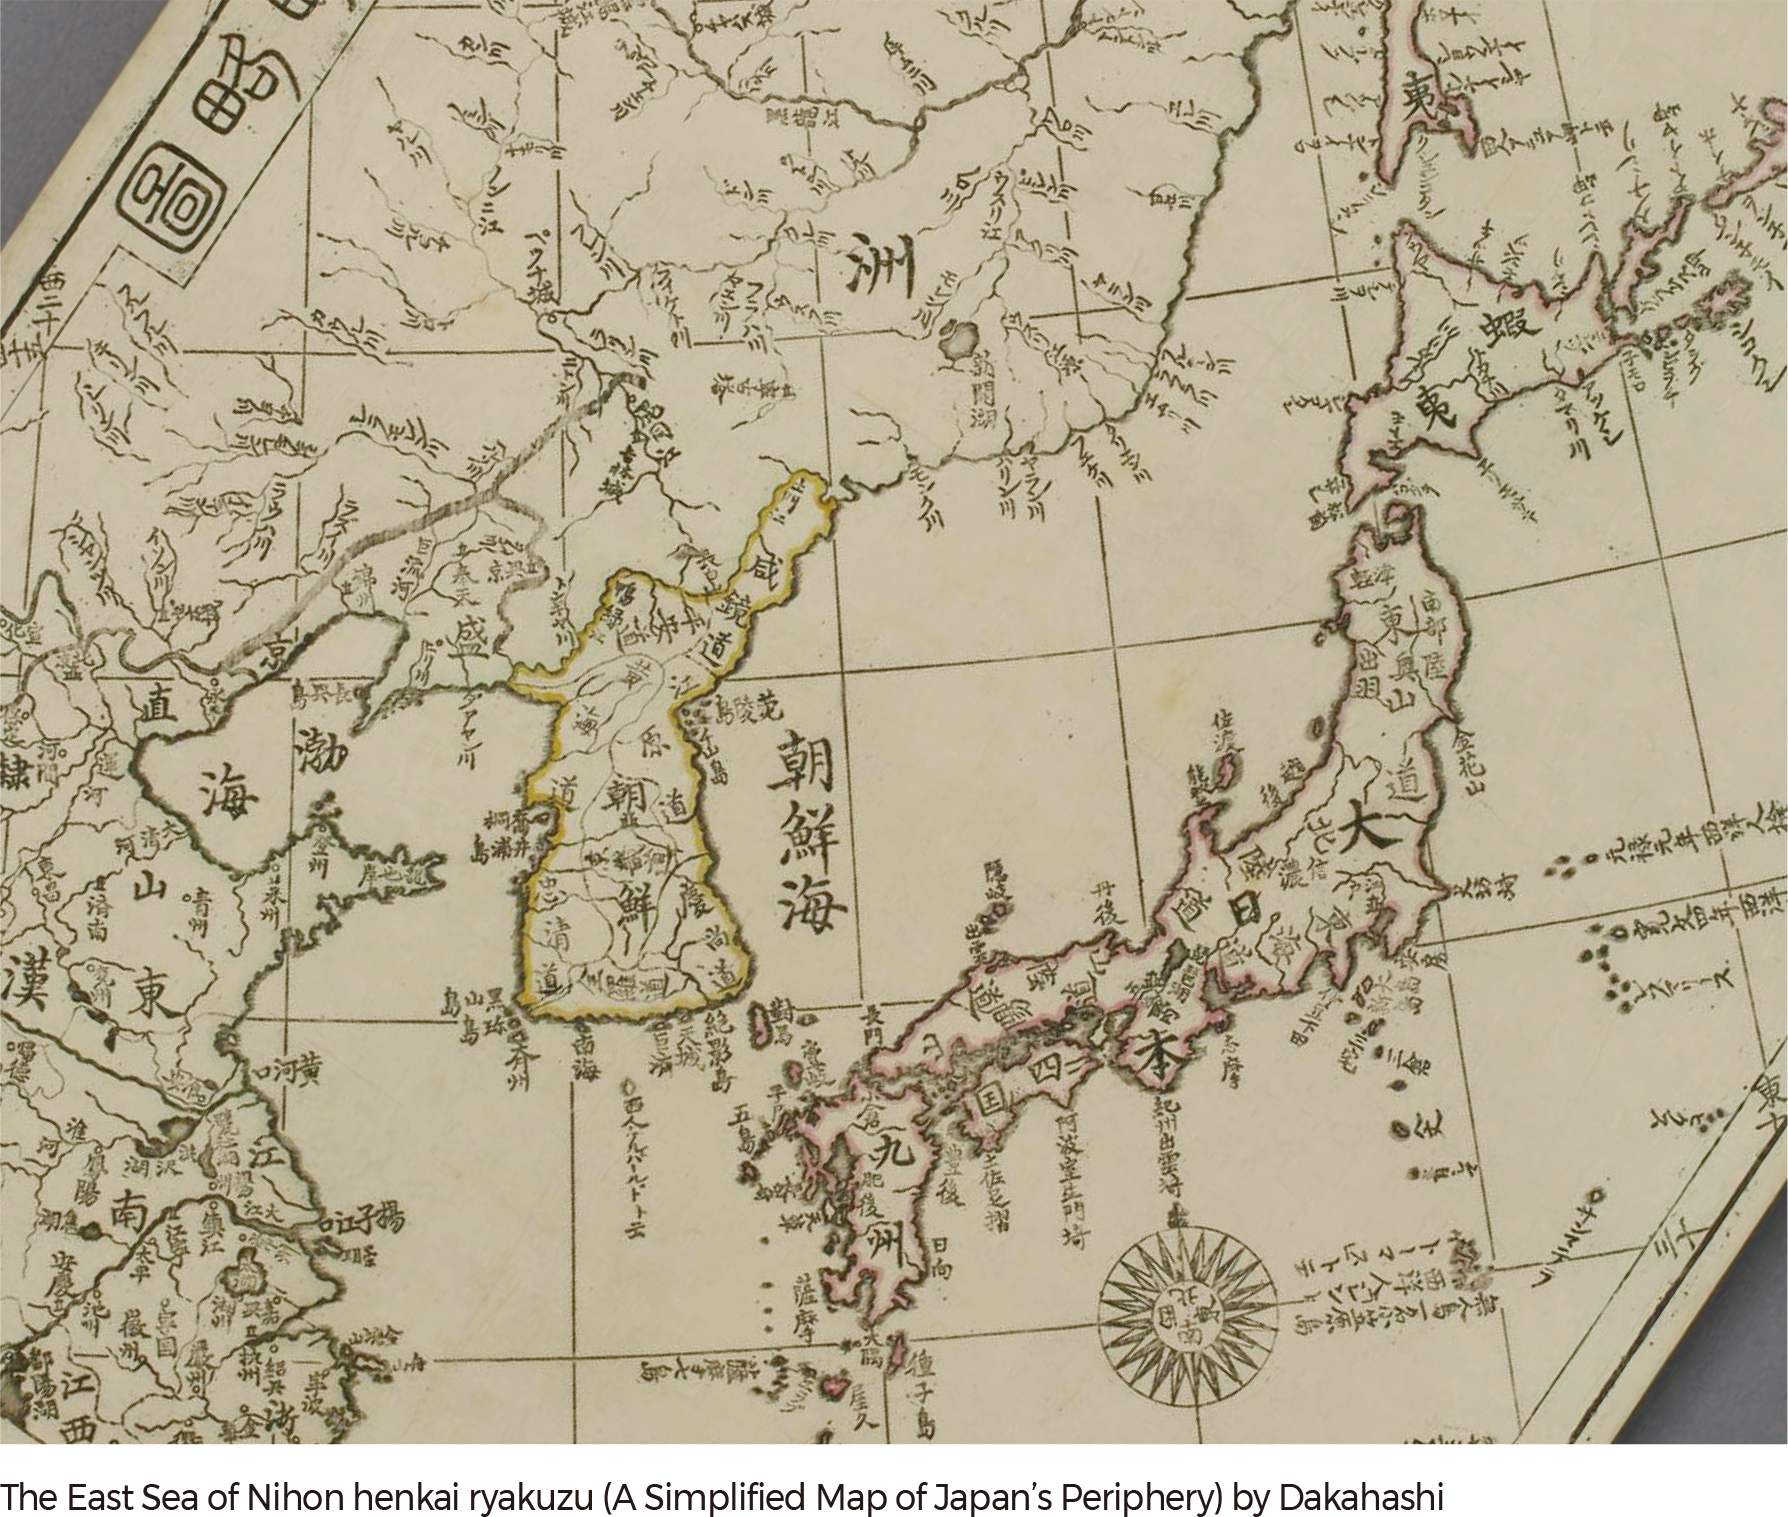 The East Sea of Nihon henkai ryakuzu (A Simplified Map of Japan’s Periphery) by Dakahashi